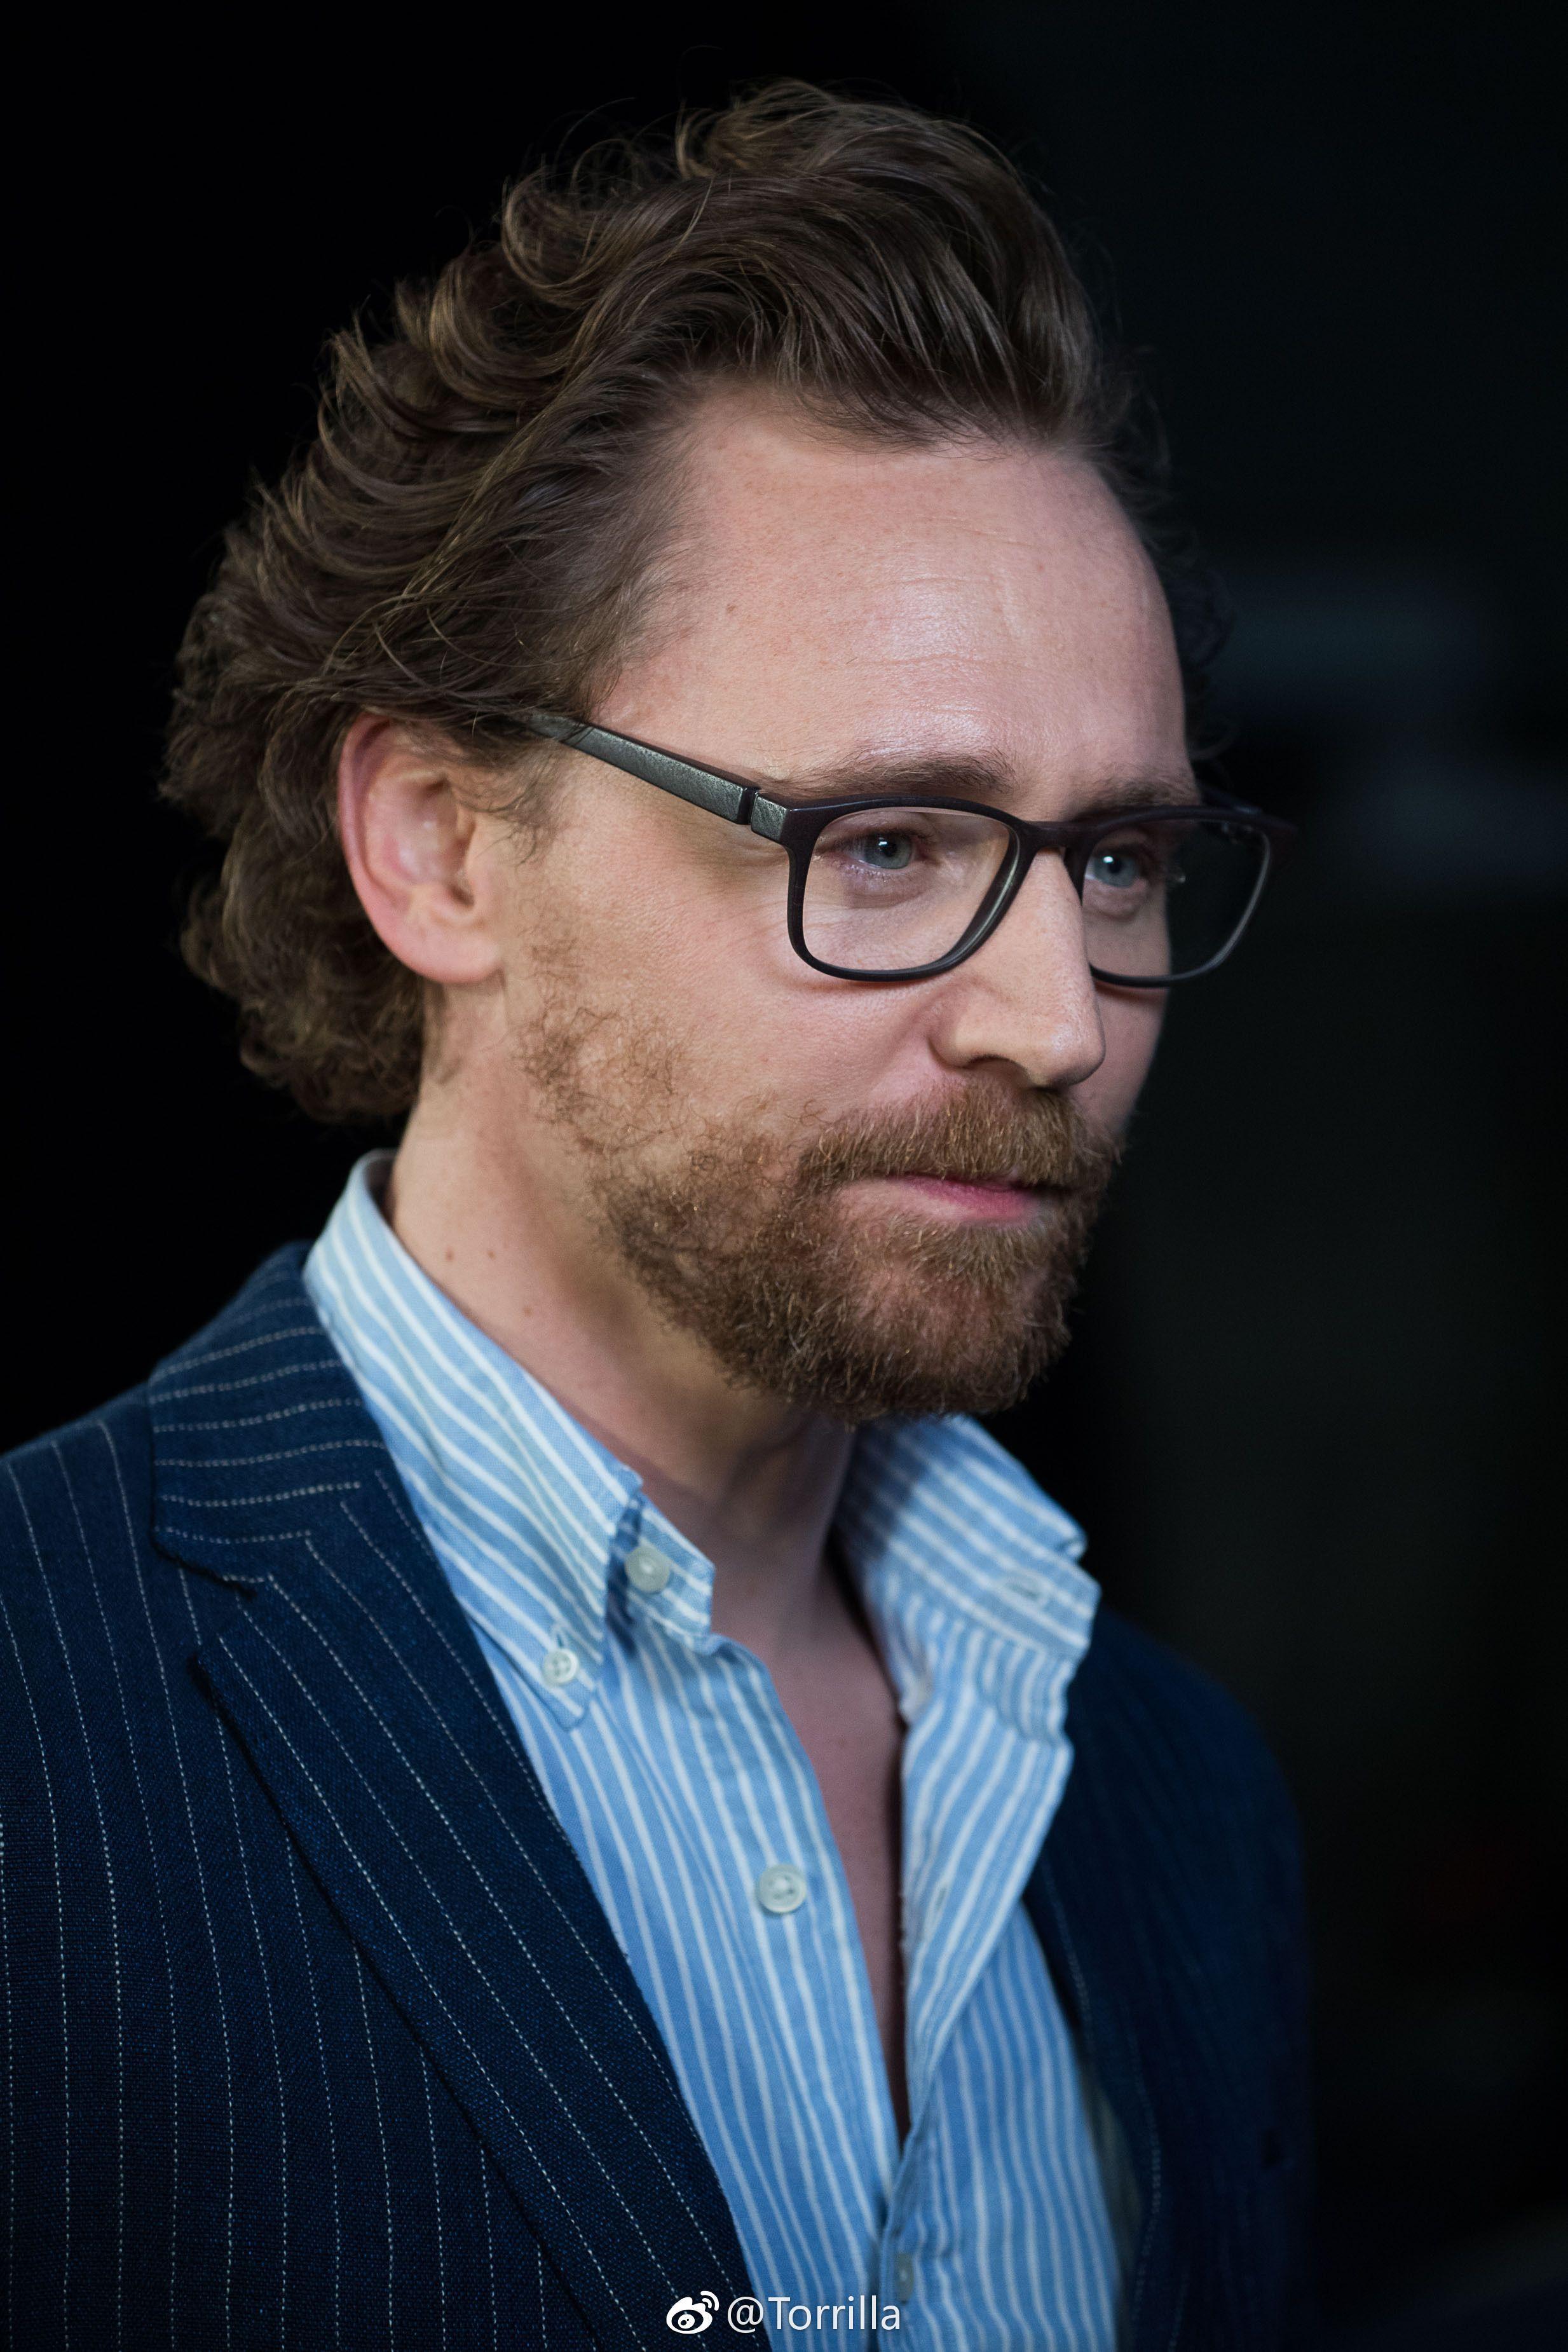 Tom Hiddleston. #InfinityWar fan screening event. April 2018